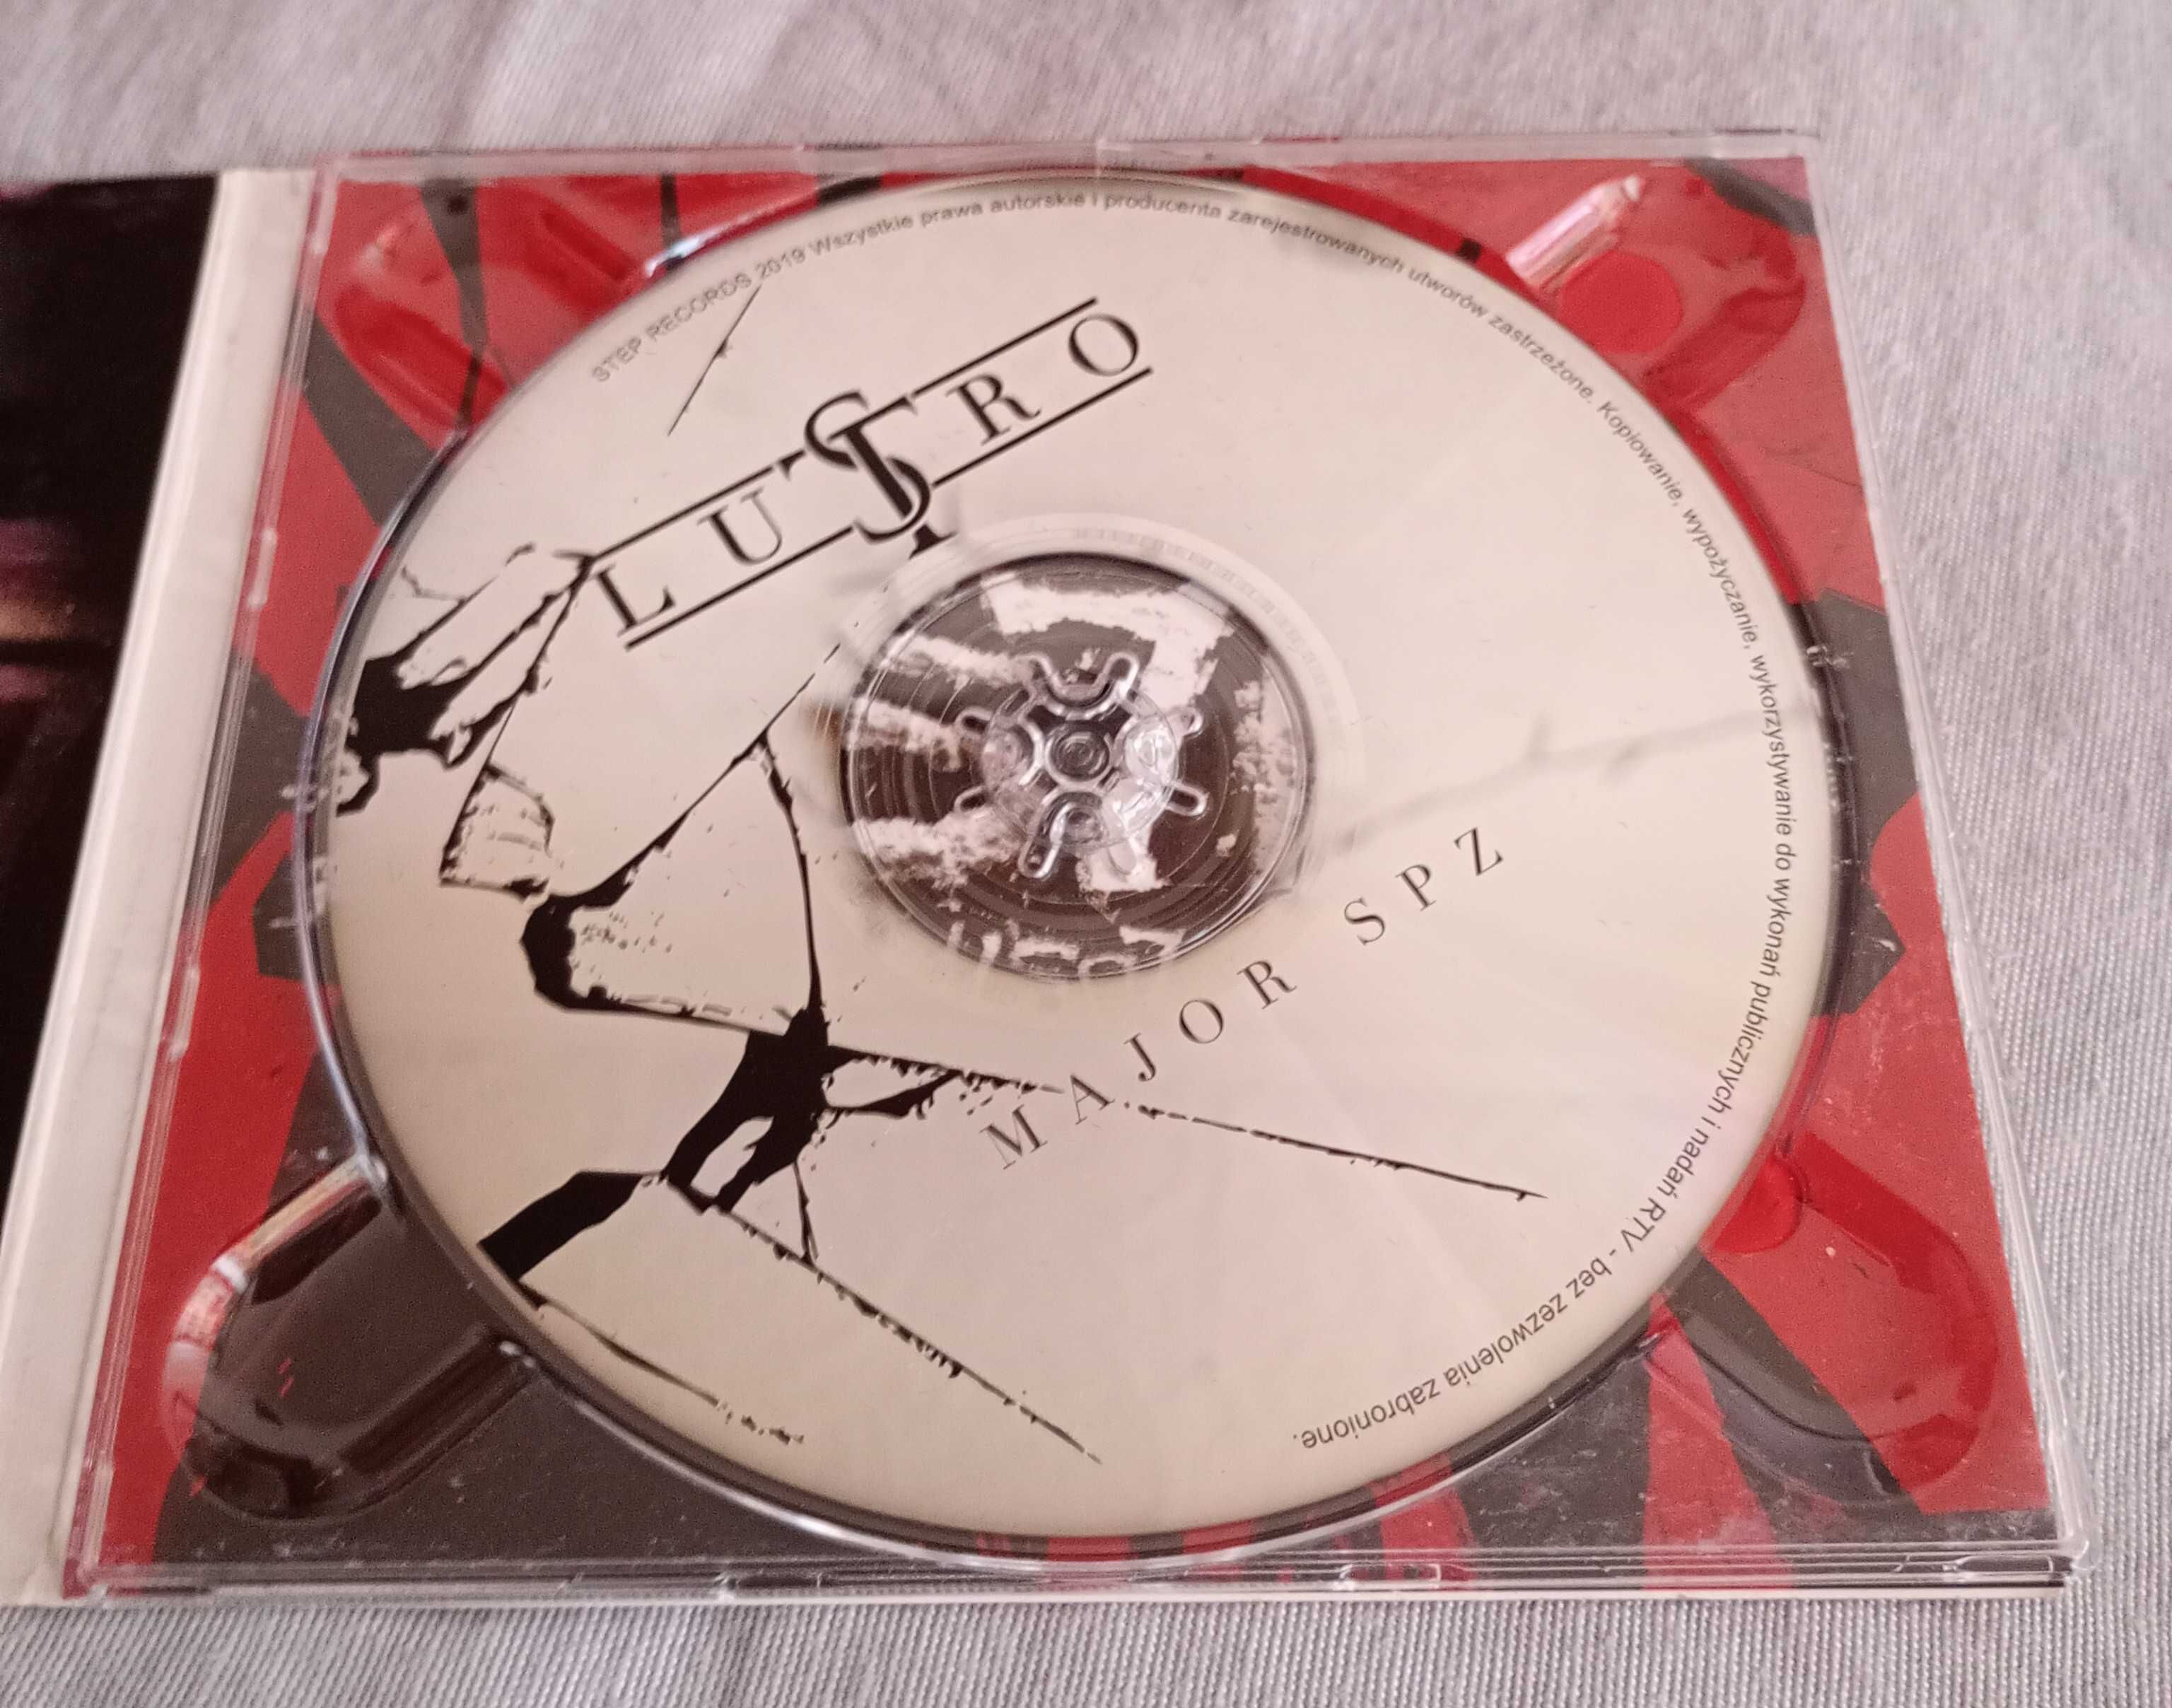 Płyta CD, LUSTRO, Major SPZ, używana